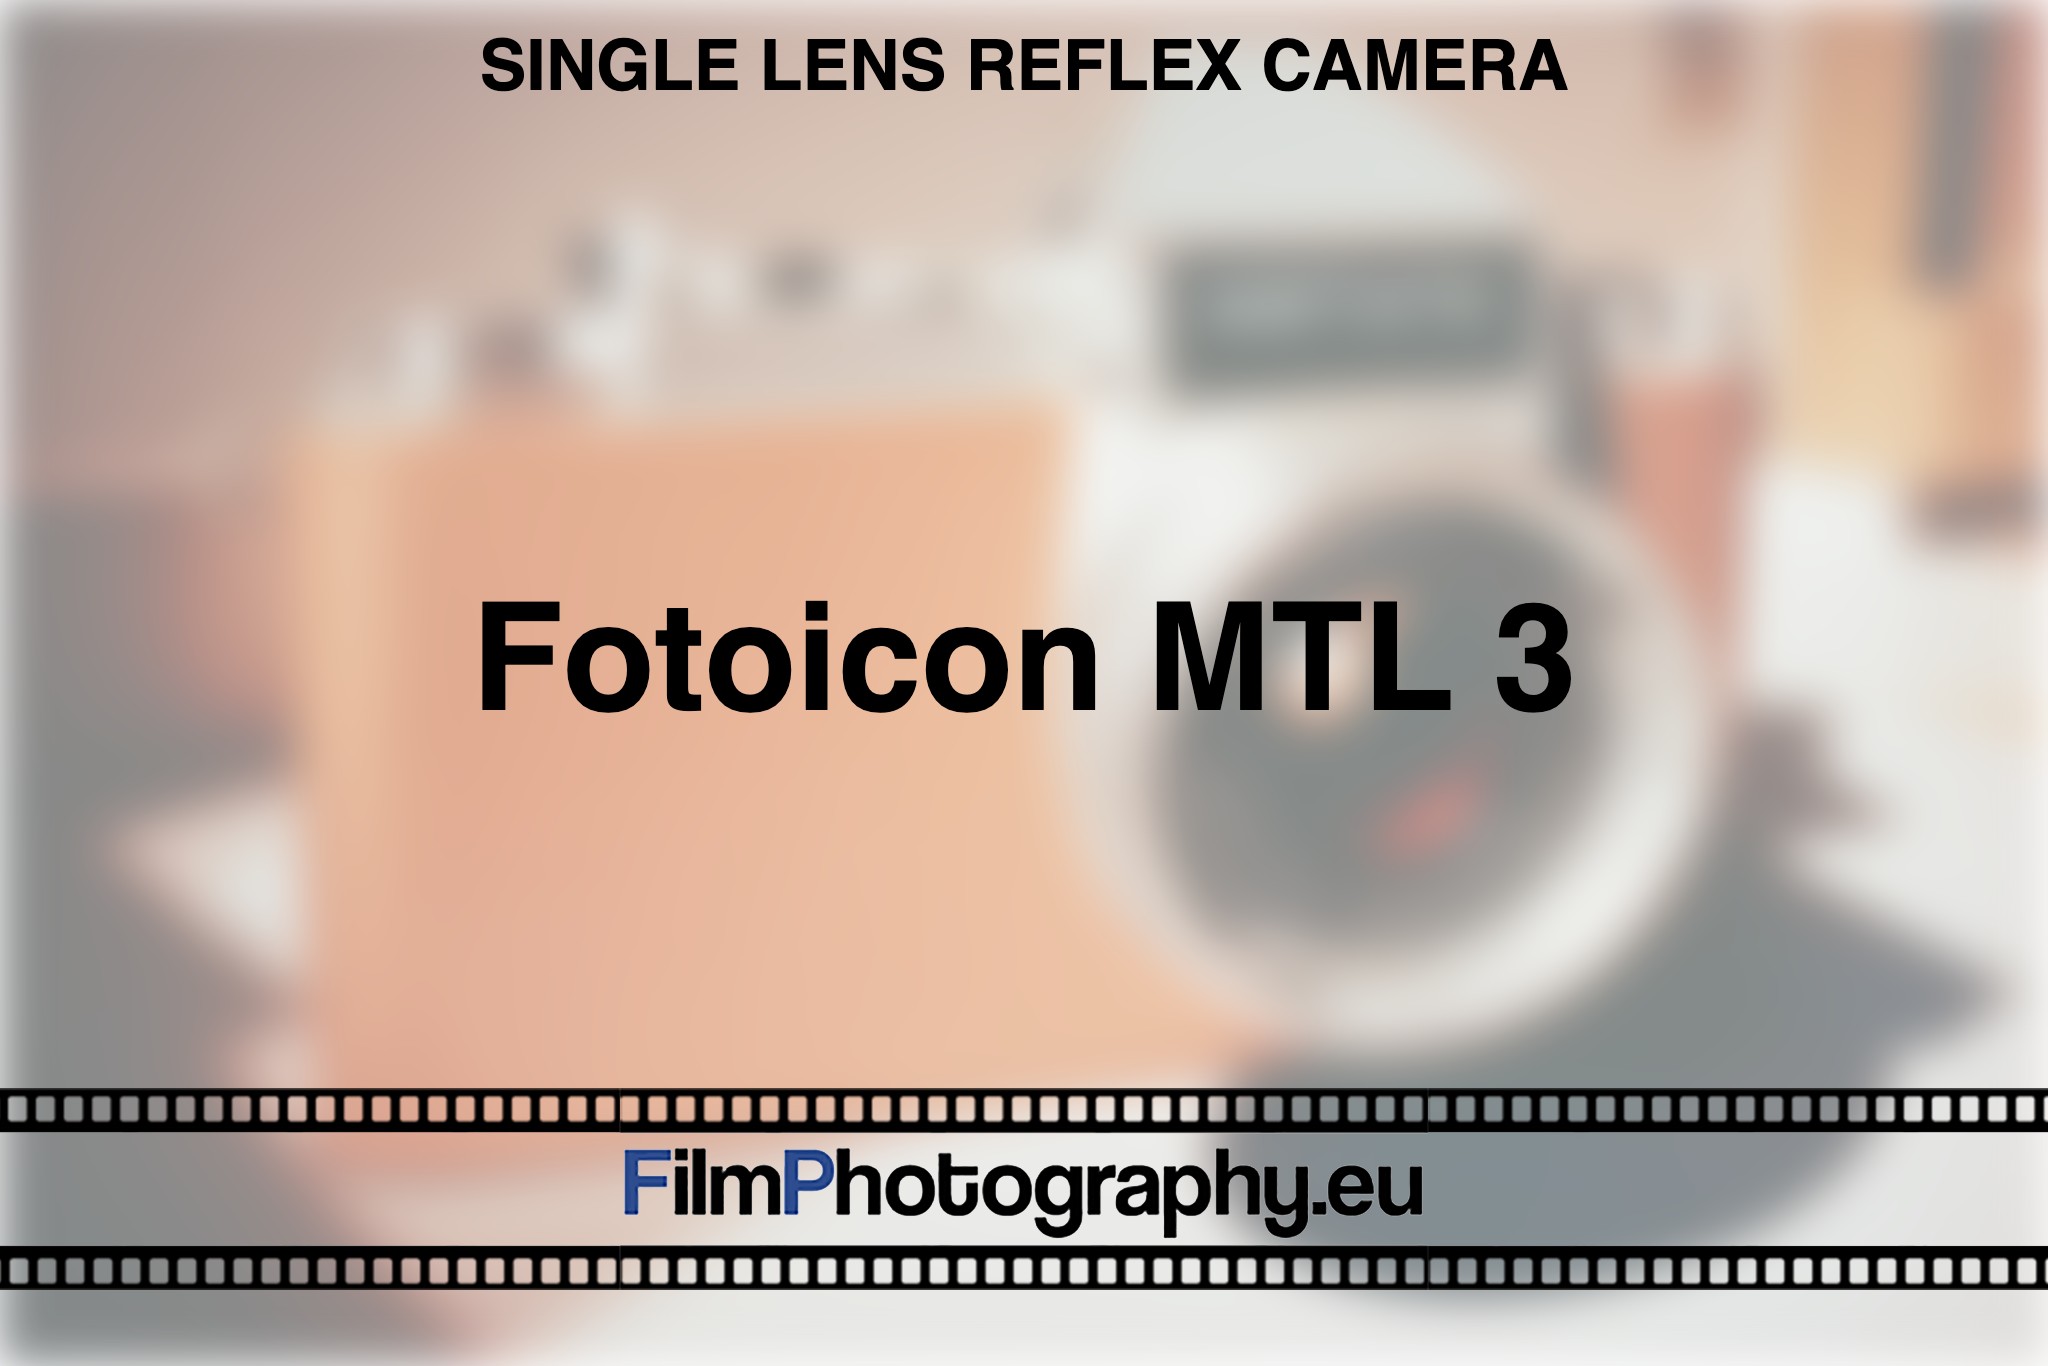 fotoicon-mtl-3-single-lens-reflex-camera-bnv